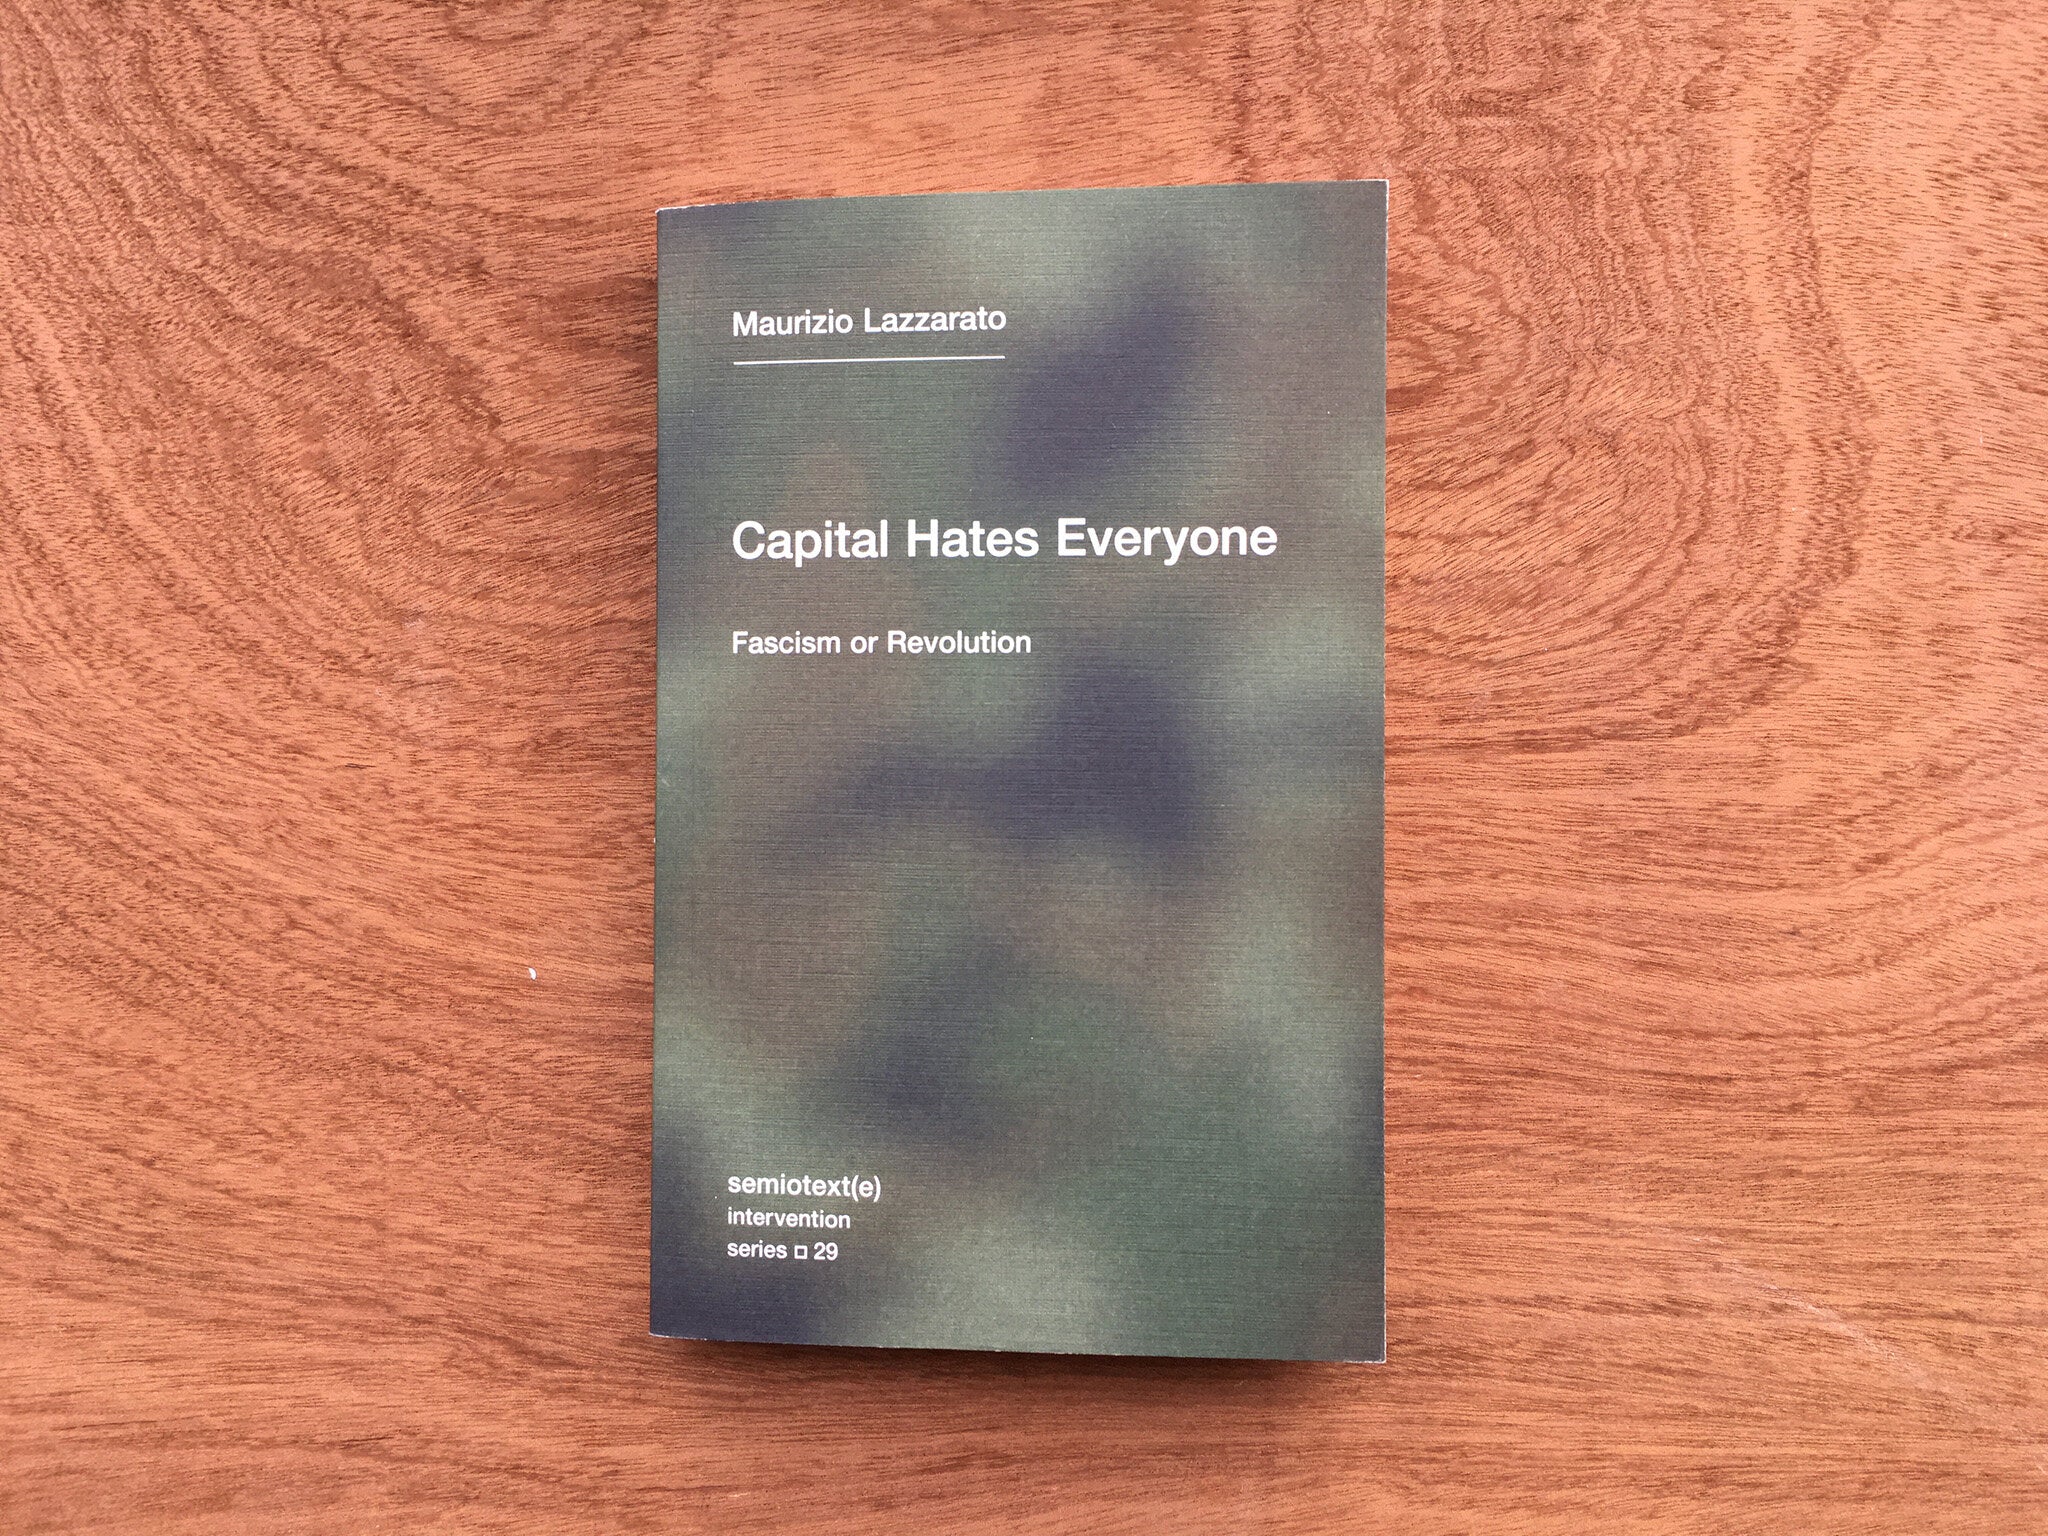 CAPITAL HATES EVERYONE: FASCISM OR REVOLUTION by Maurizio Lazzarato